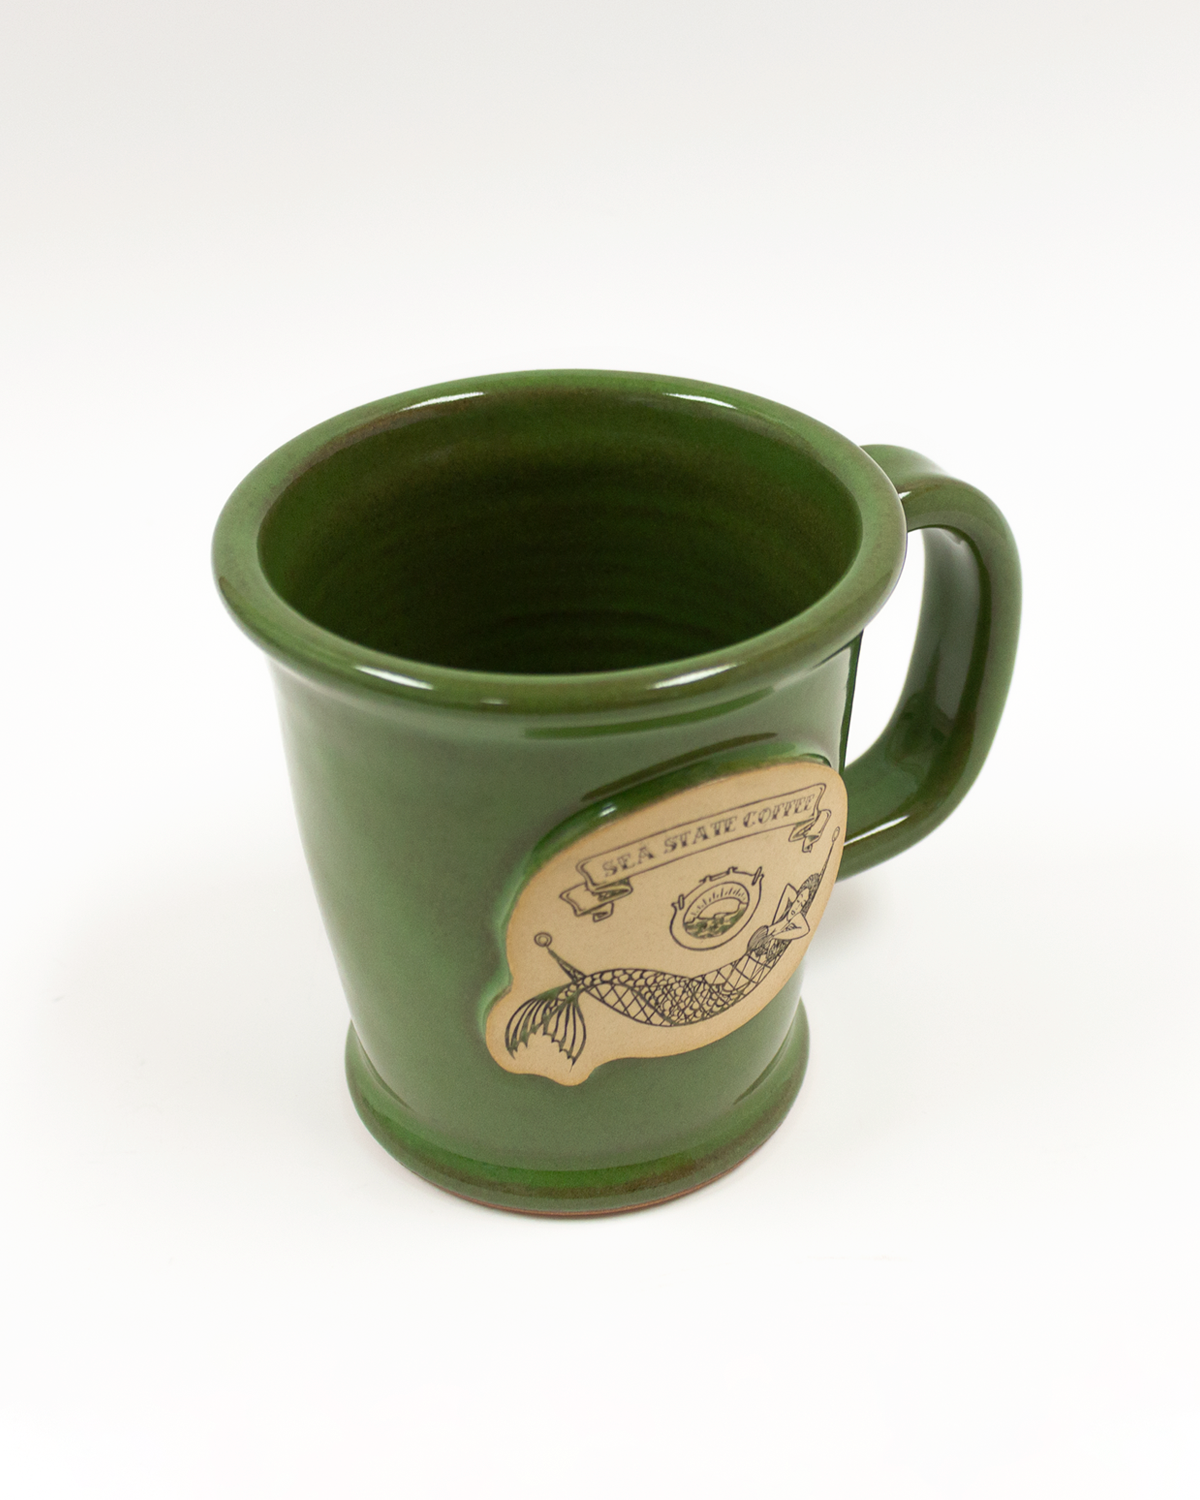 Sea State Mermaid Mug - Sea State Coffee